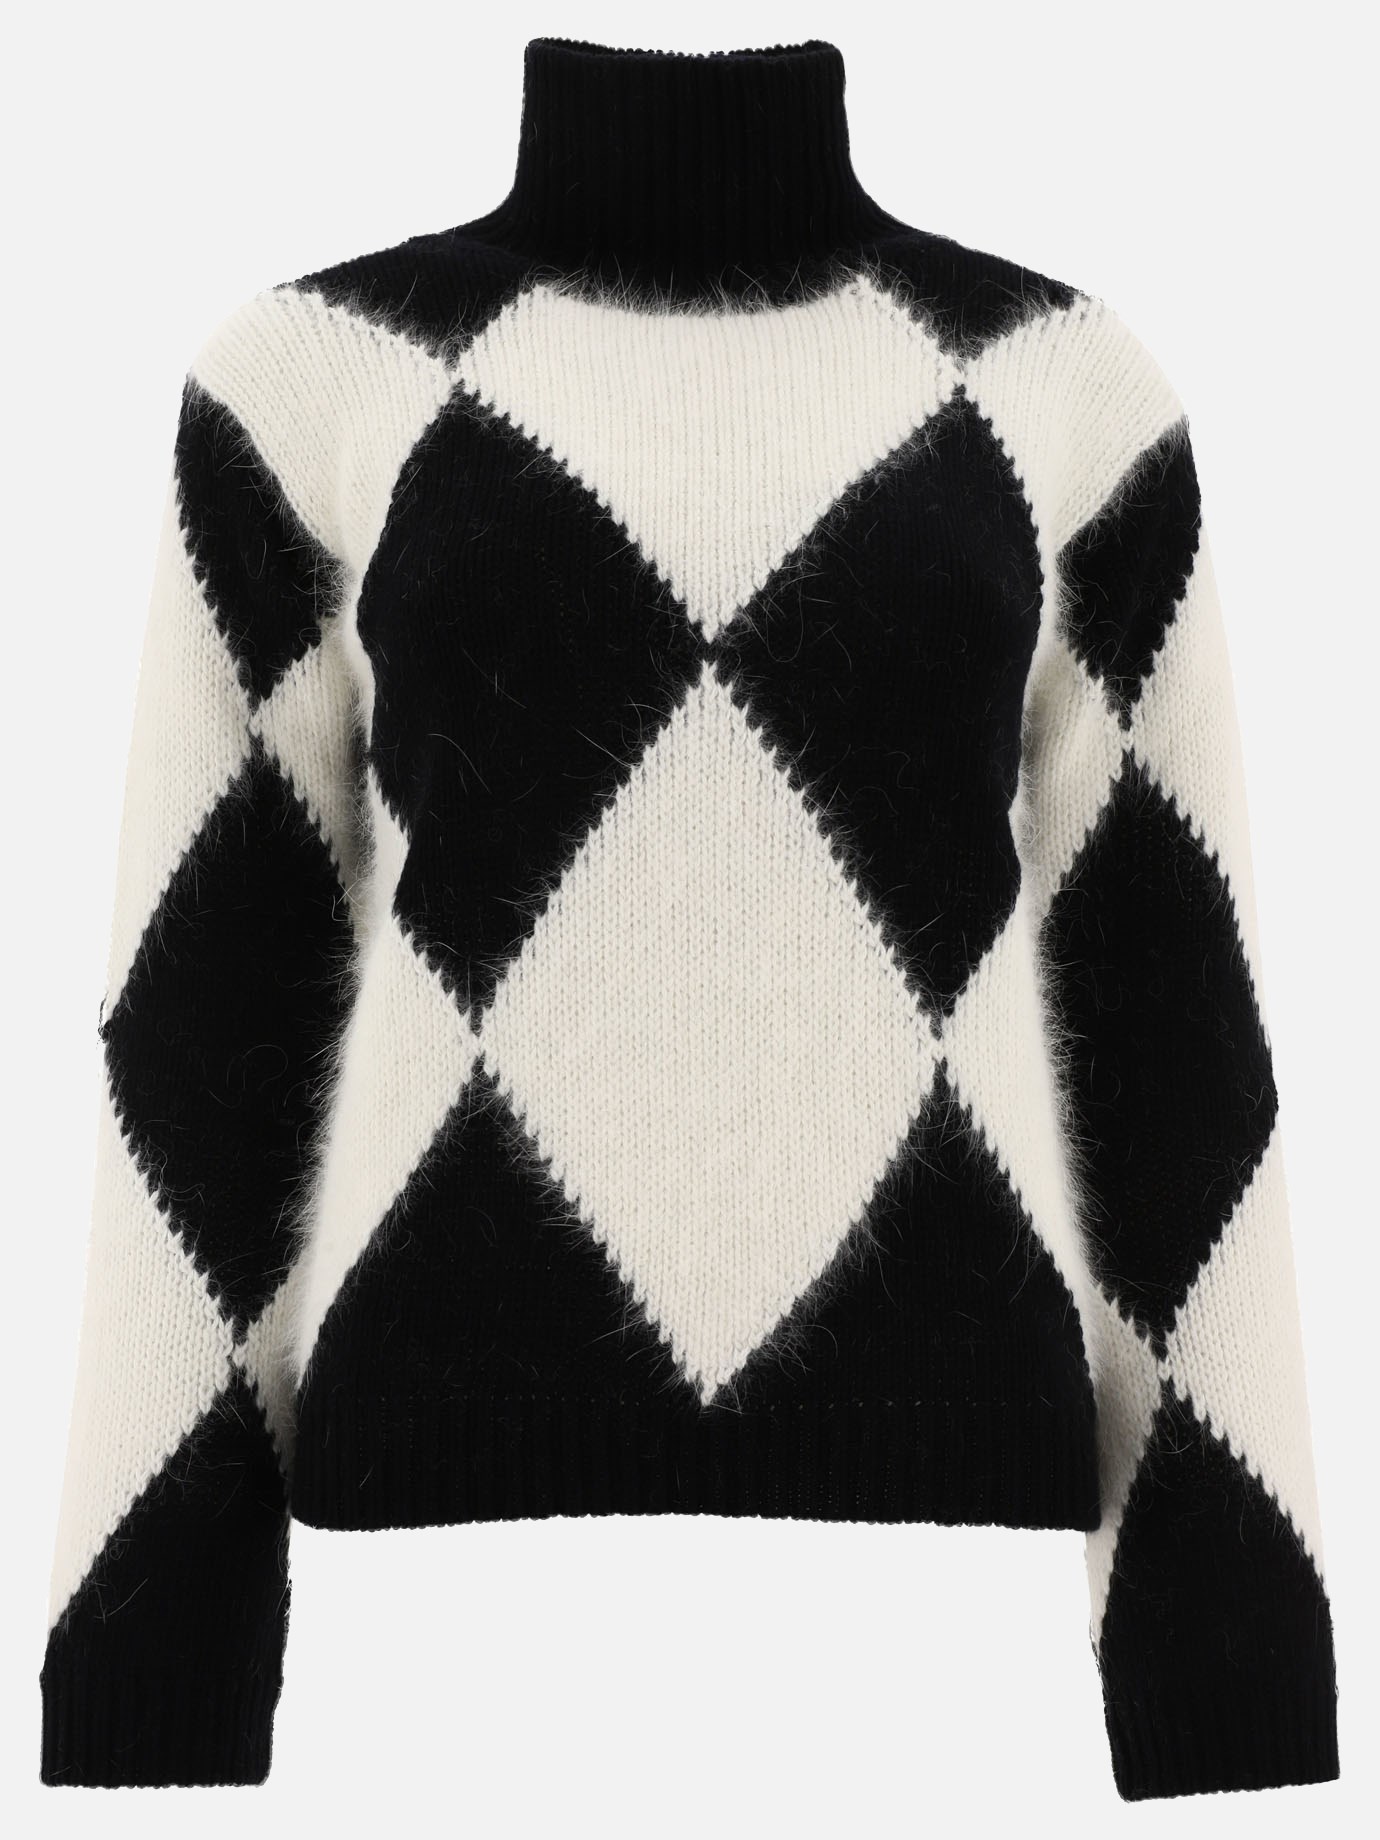 Lozenged turtleneck sweater